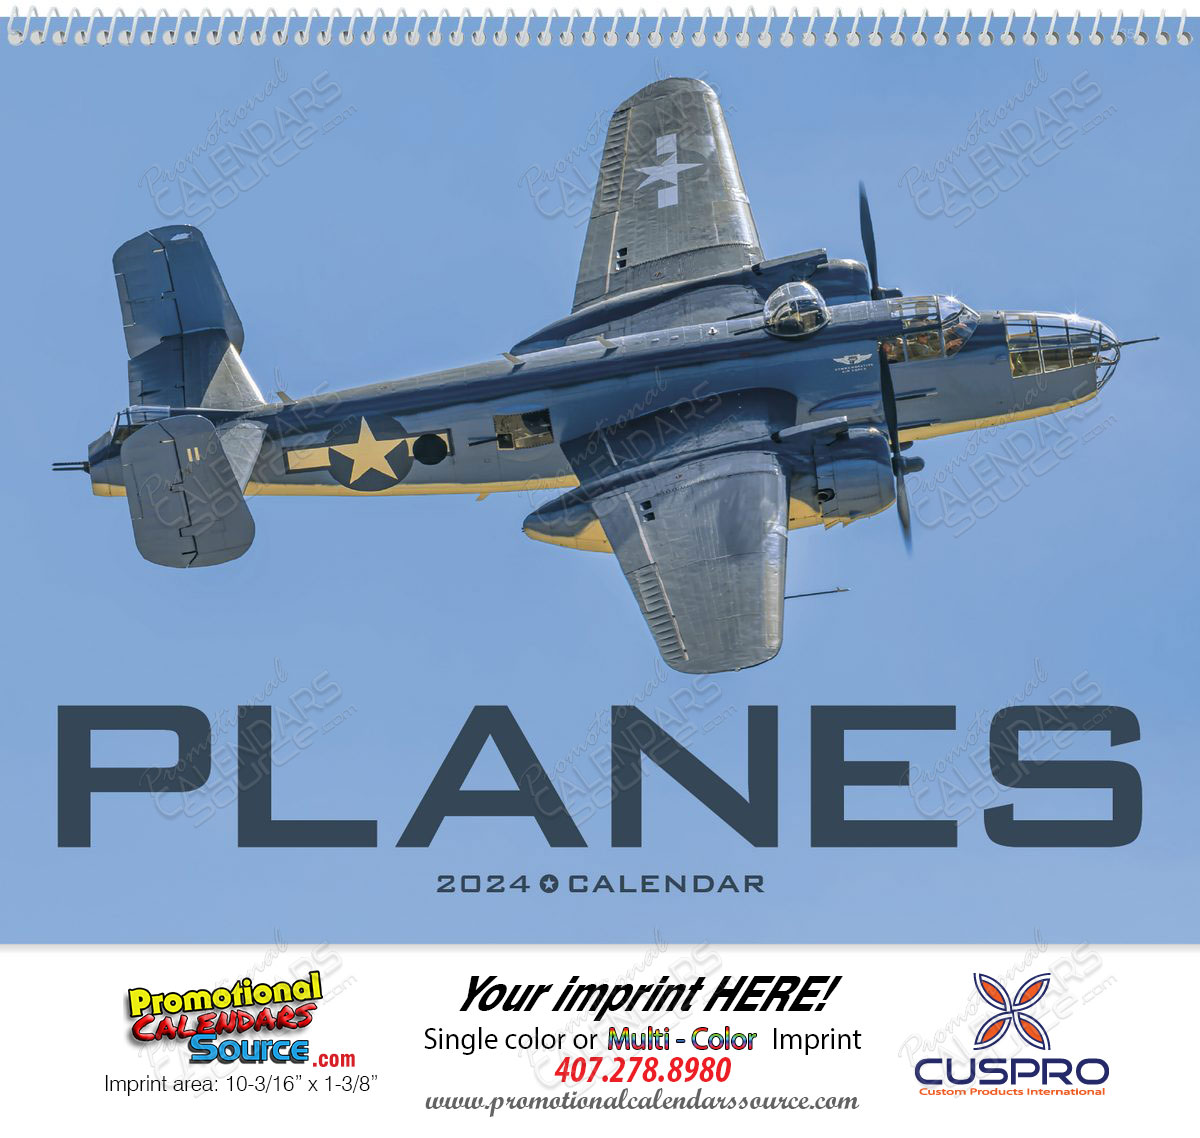 Planes Promotional Calendar 